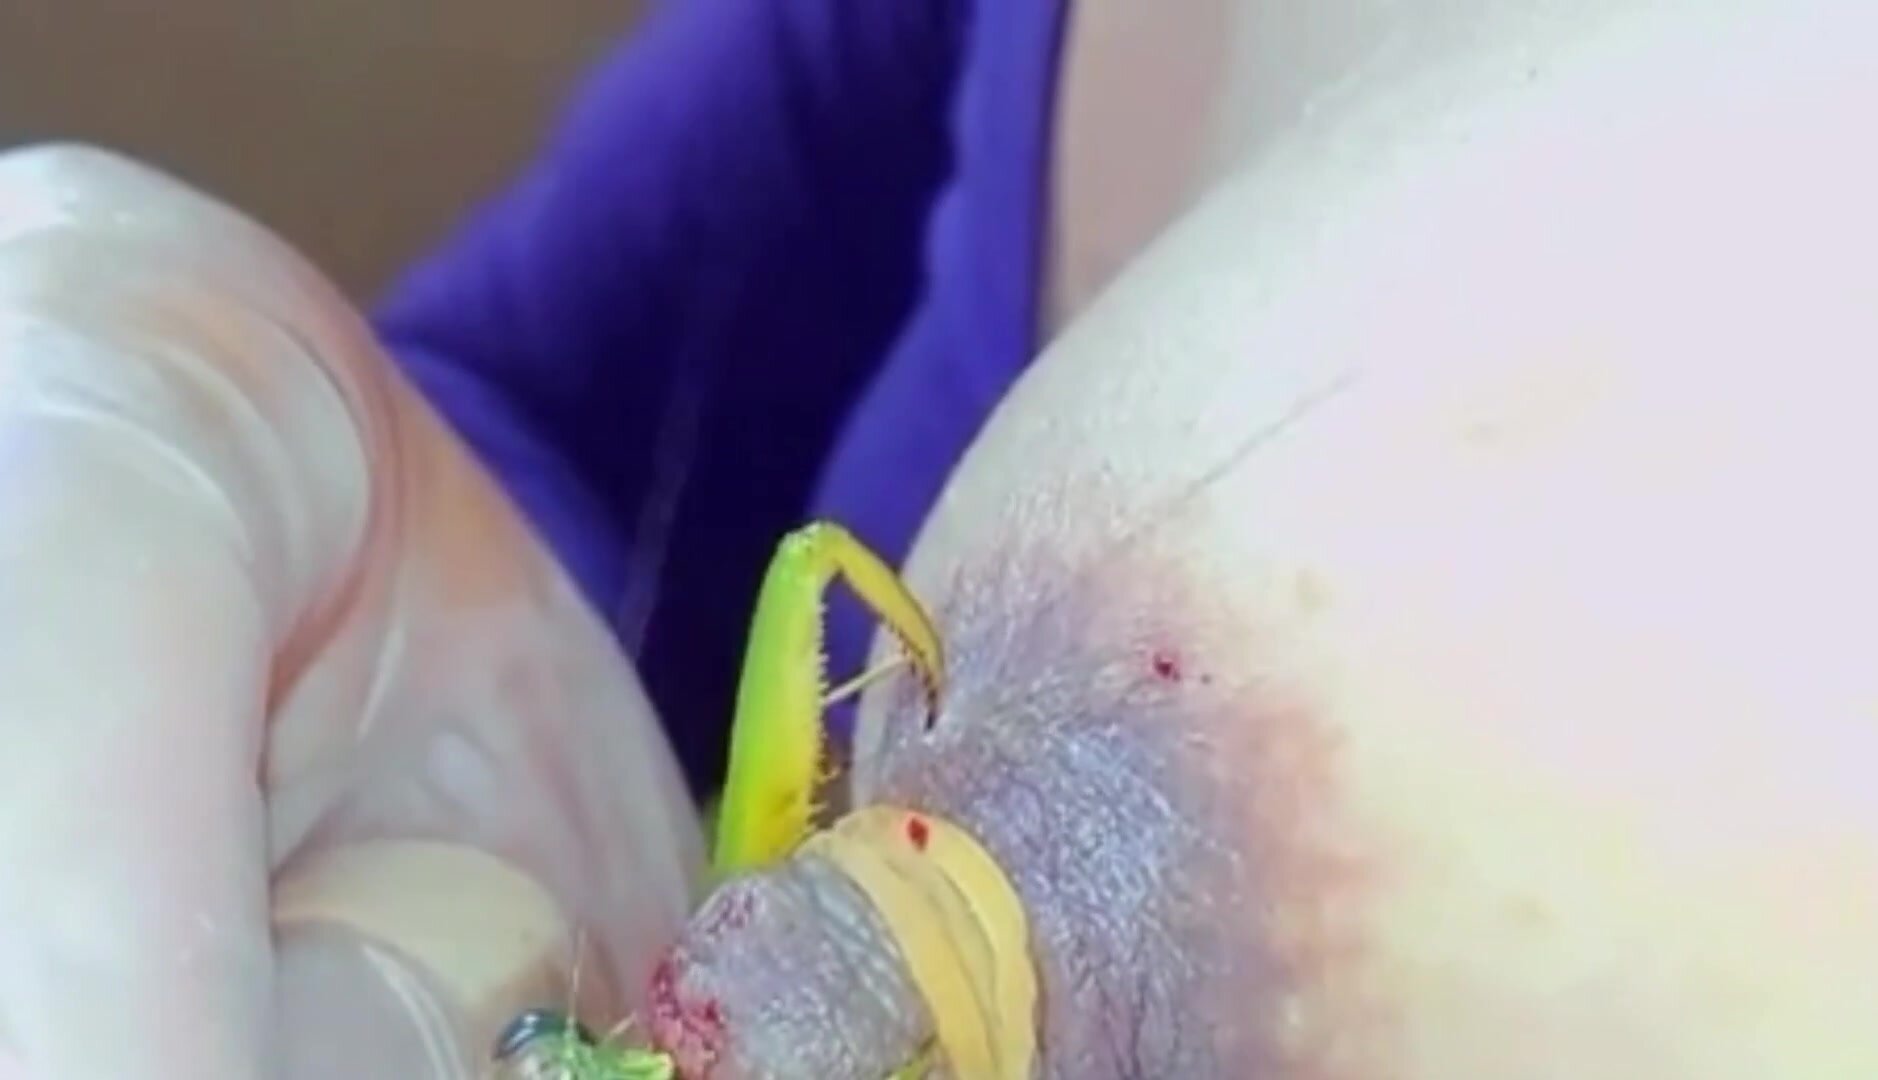 Mantis eating a nipple